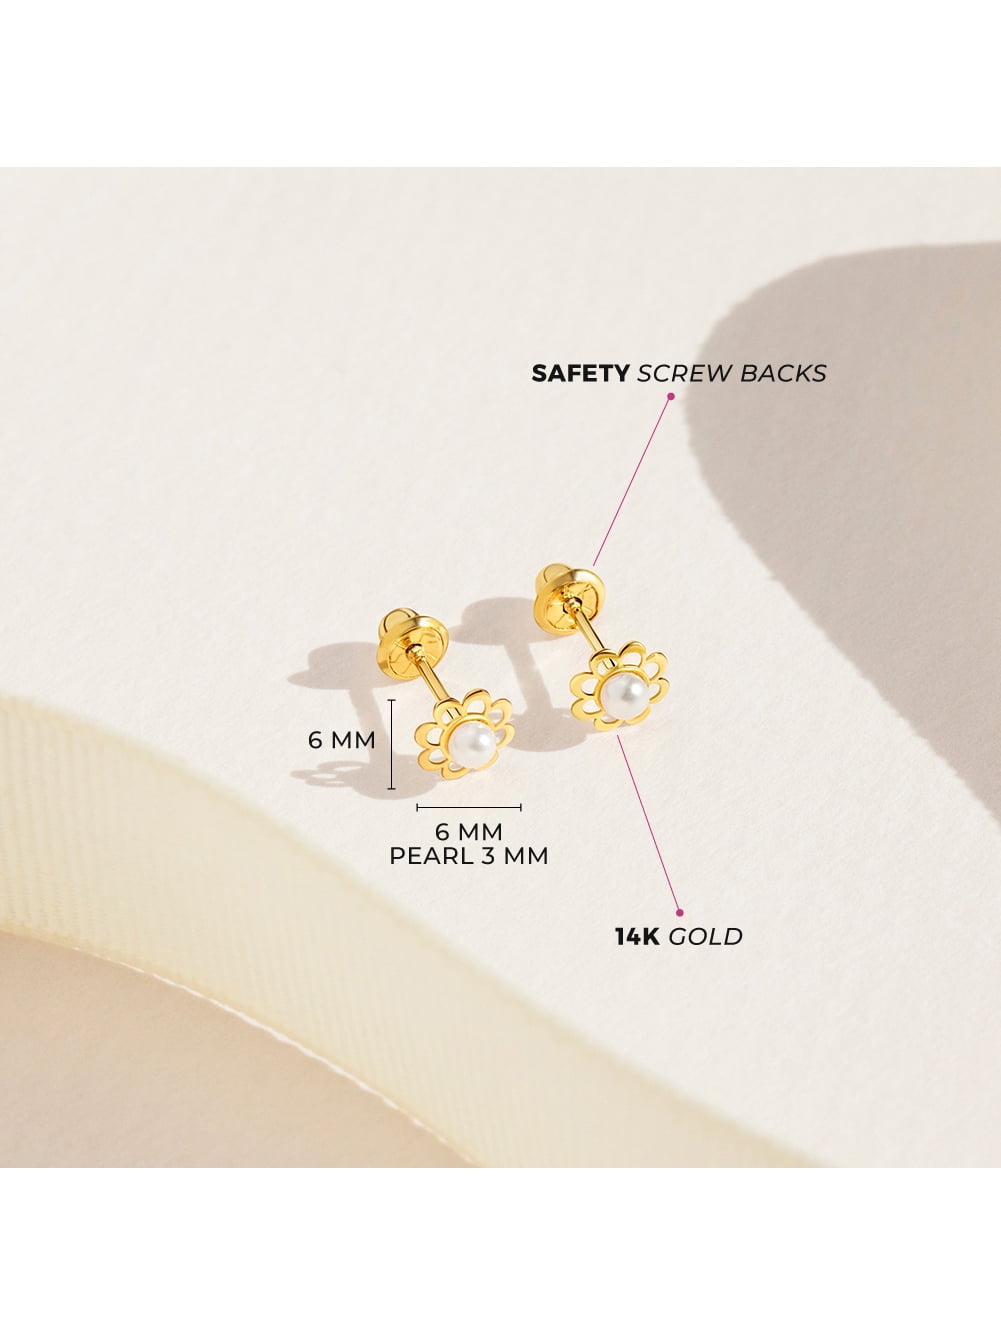 5mm Pearl Screw Back Earrings for Girls in 14K Yellow Gold | Jewelry Vine